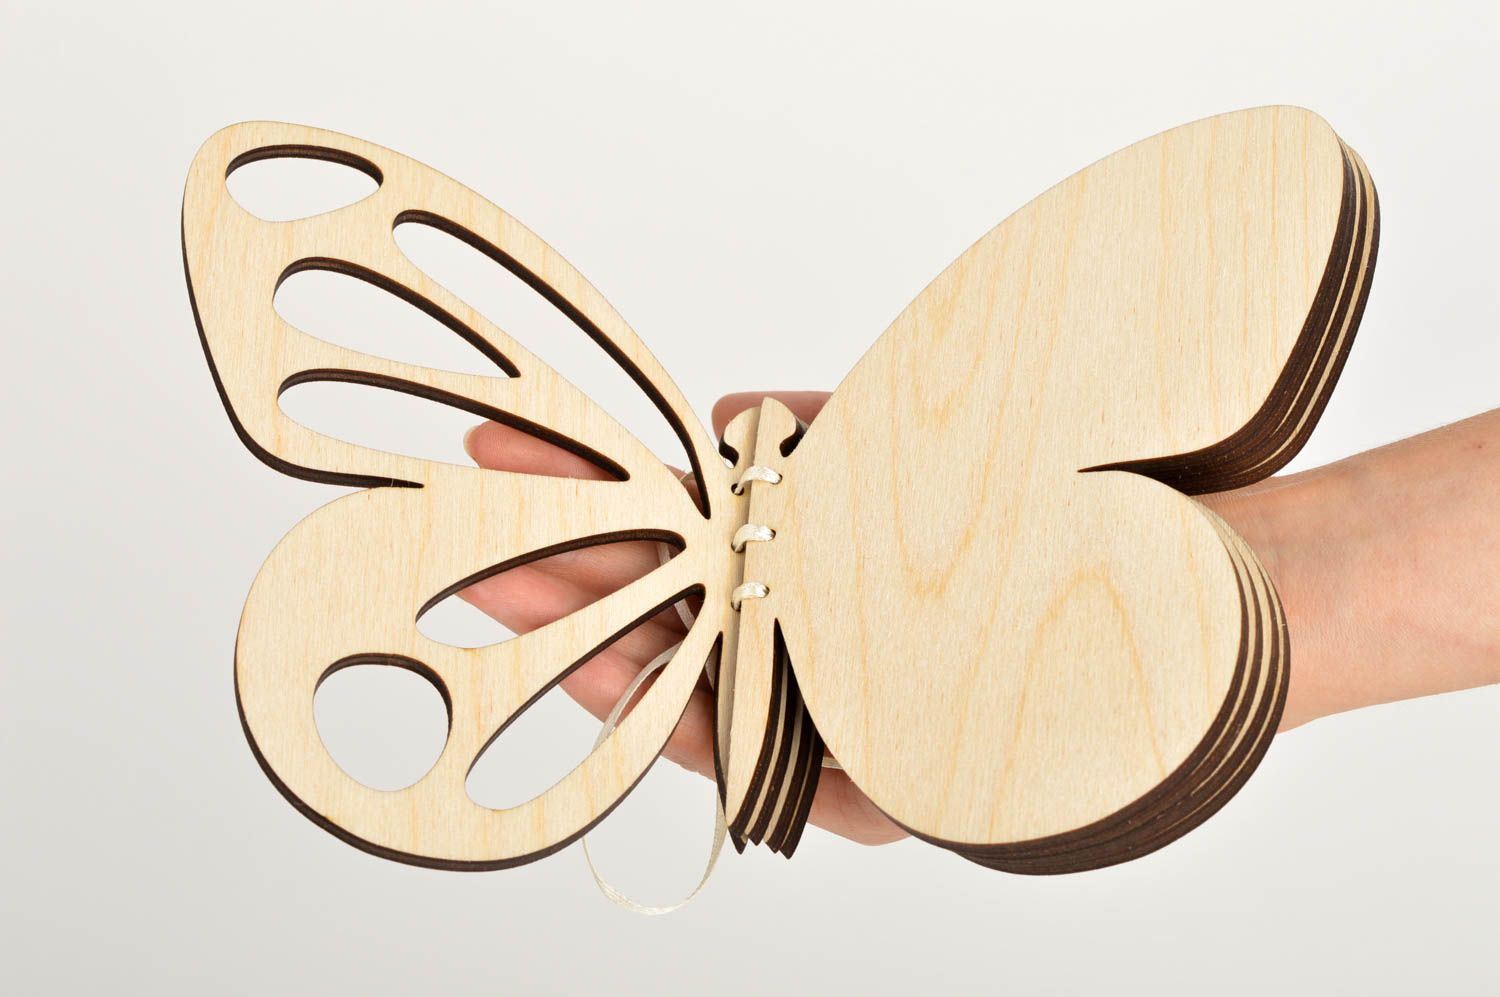 Unusual handmade wooden blank art materials art and craft supplies gift ideas photo 2